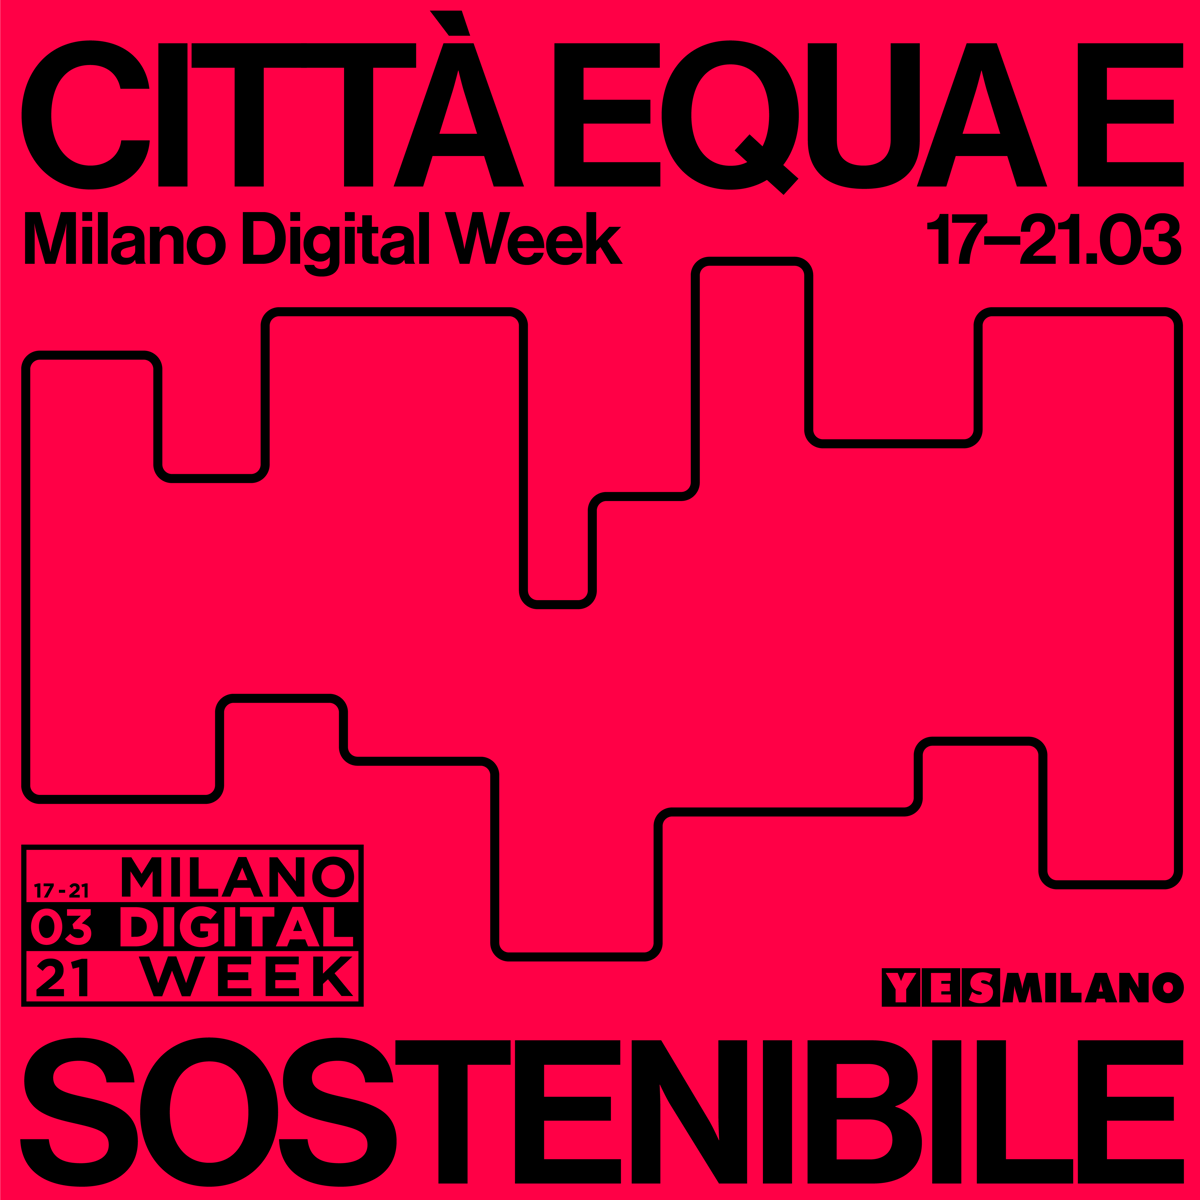 Milano Digital Week: città equa e sostenibile